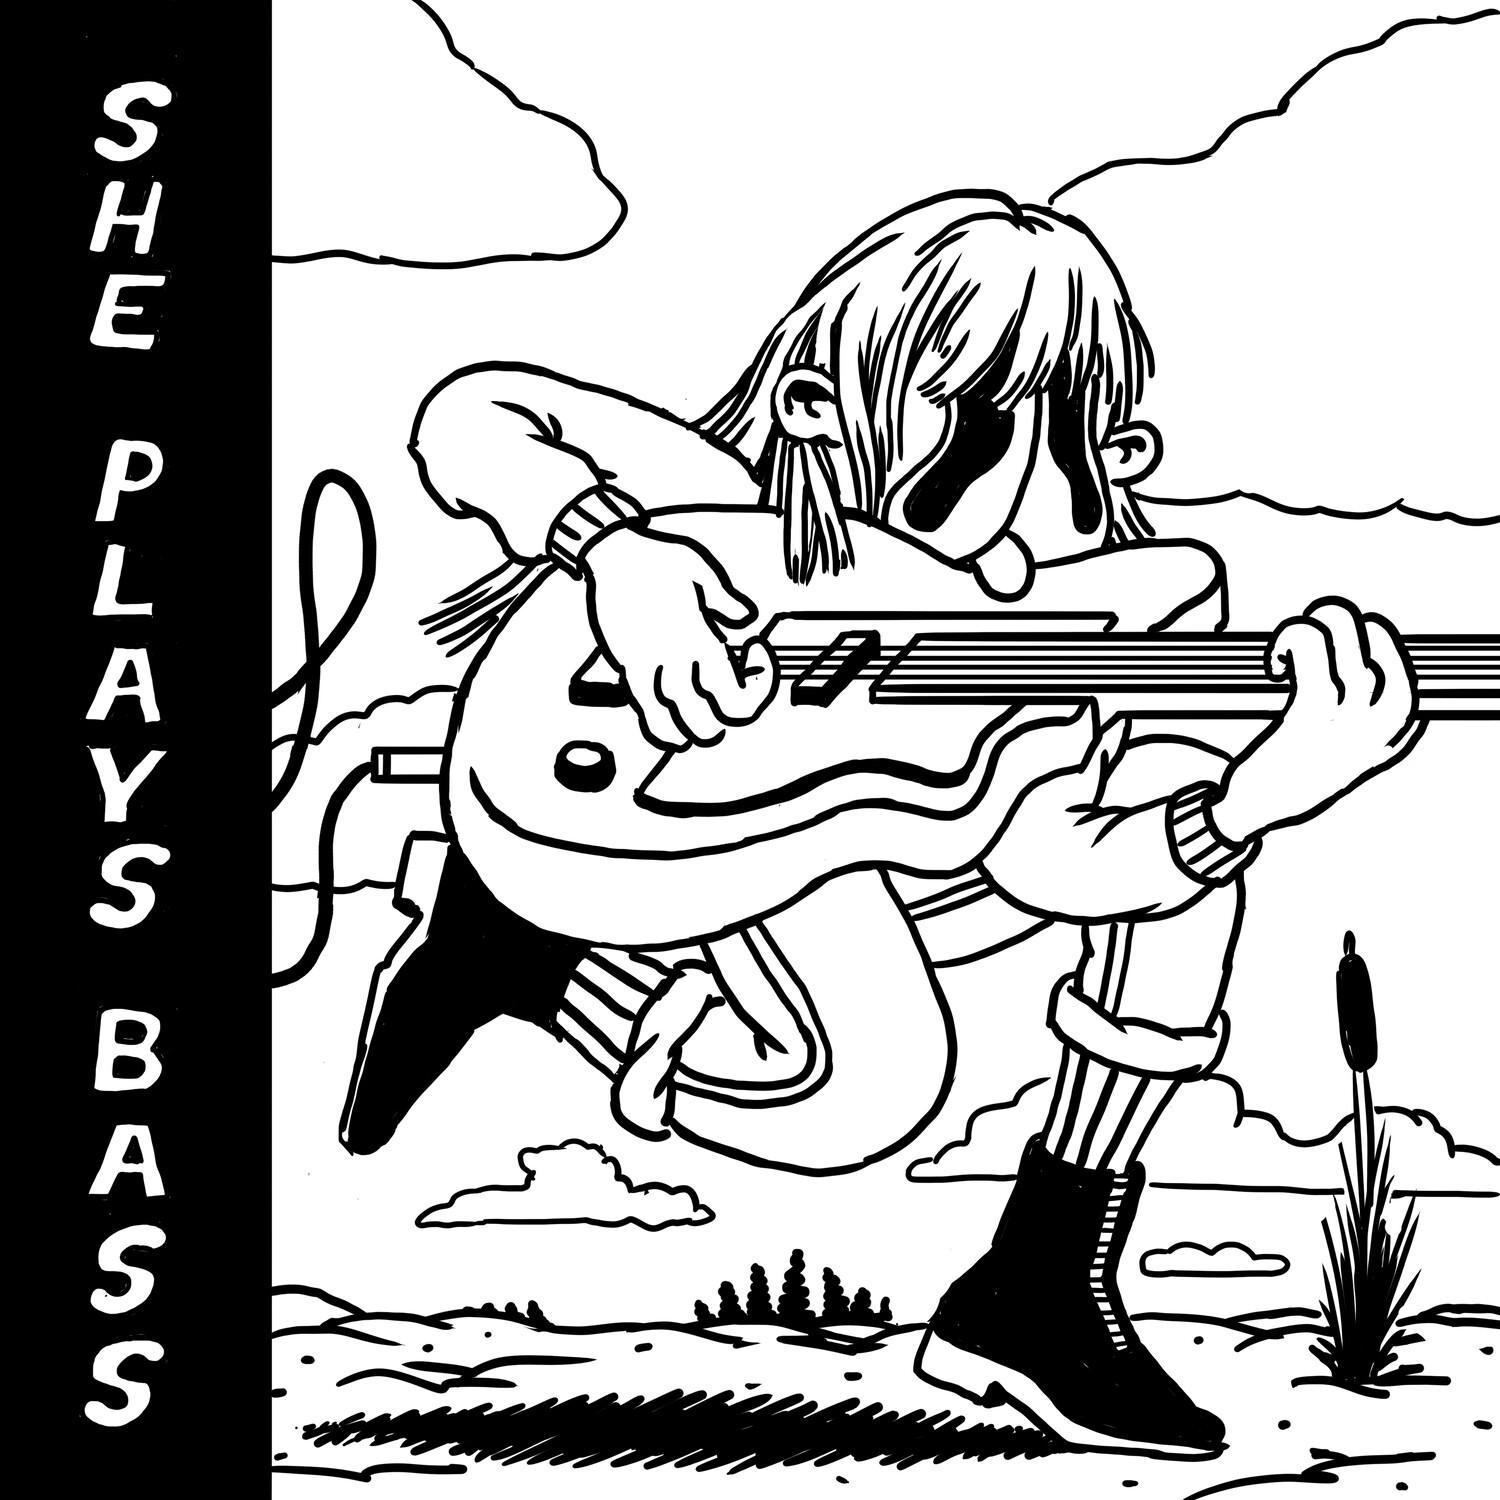 She Plays Bass歌词 歌手beabadoobee-专辑She Plays Bass-单曲《She Plays Bass》LRC歌词下载